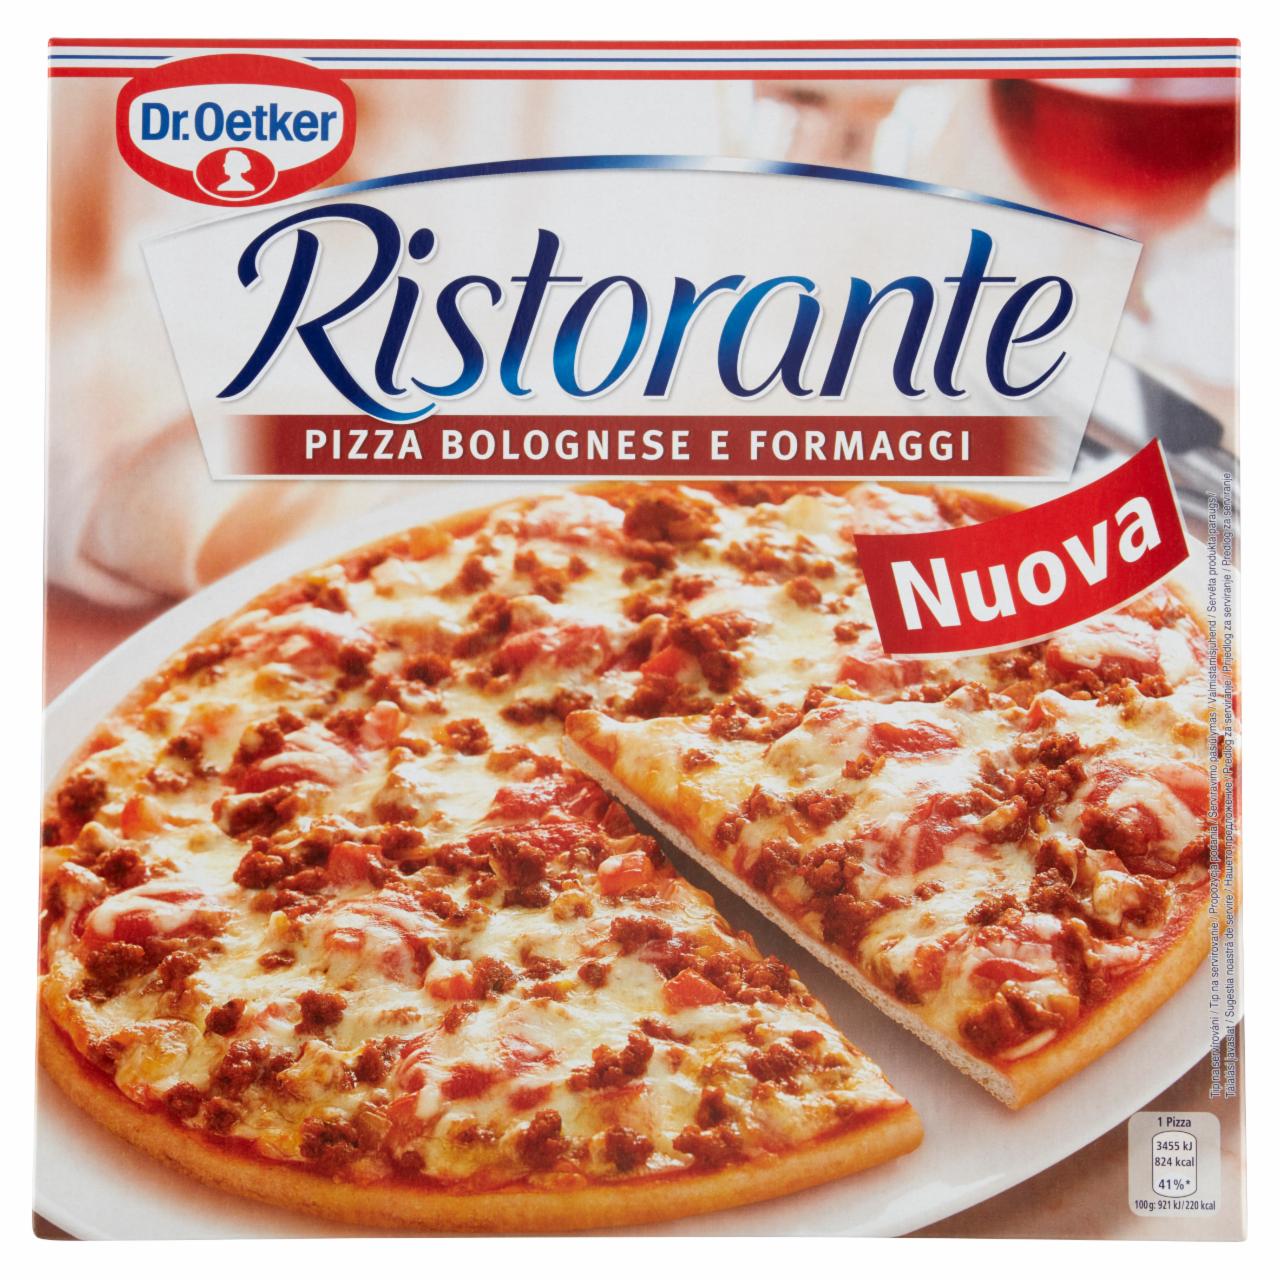 Képek - Dr. Oetker Ristorante Pizza Bolognese E Formaggi gyorsfagyasztott pizza paradicsommal 375 g